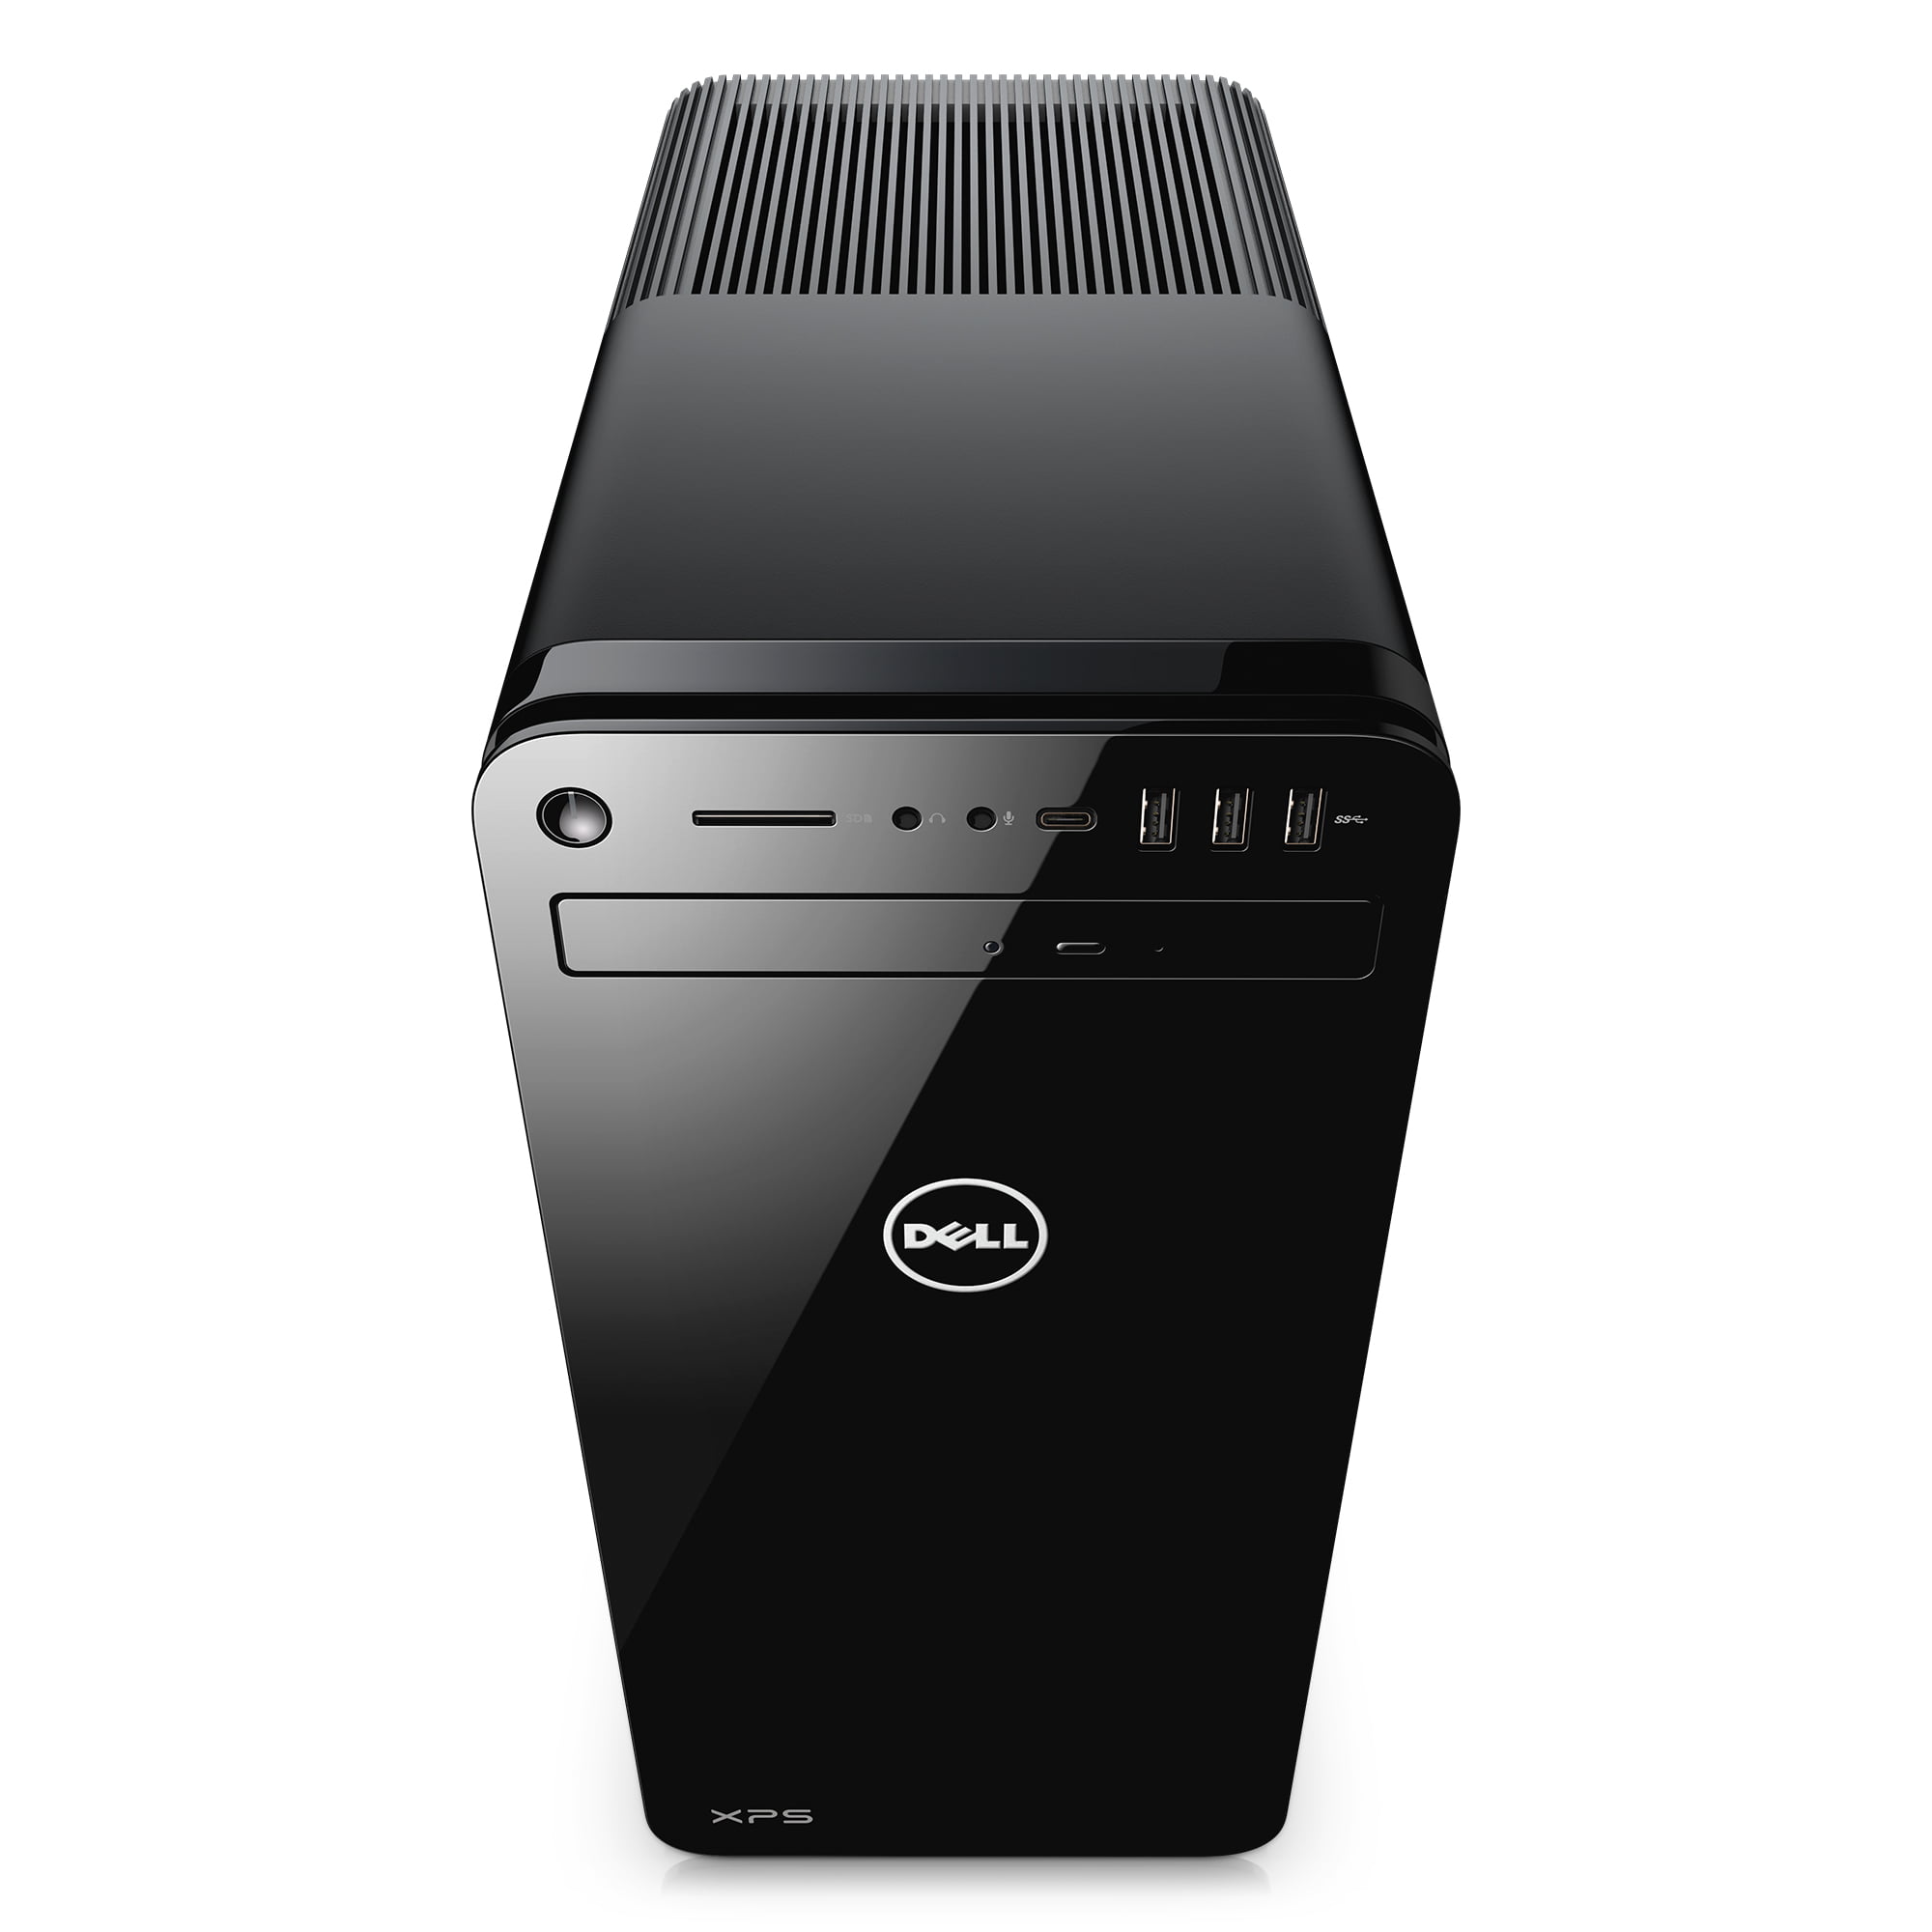 Dell XPS 8930 Desktop, Intel Core i7-8700, NVIDIA GeForce GTX 1050 Ti 4GB,  1TB HDD + 16GB Intel Optane Memory, 8GB RAM, XPS8930-7528BLK-PUS